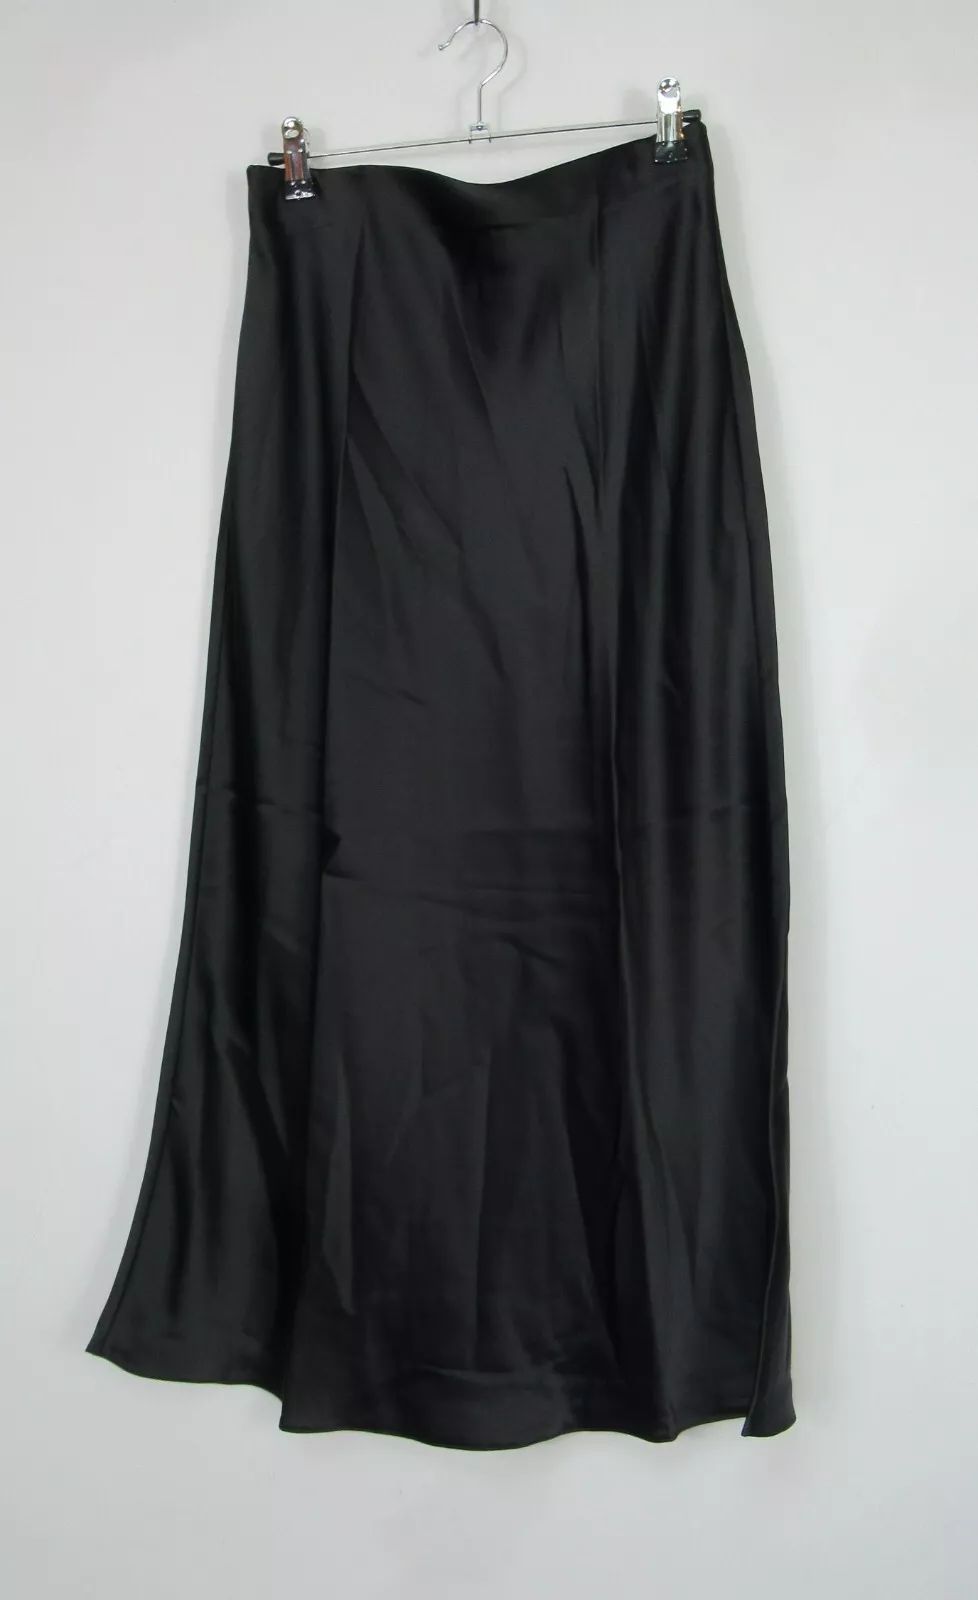 ASOS DESIGN Women's Satin Bias Midi skirt Black Size 10 - New | eBay US